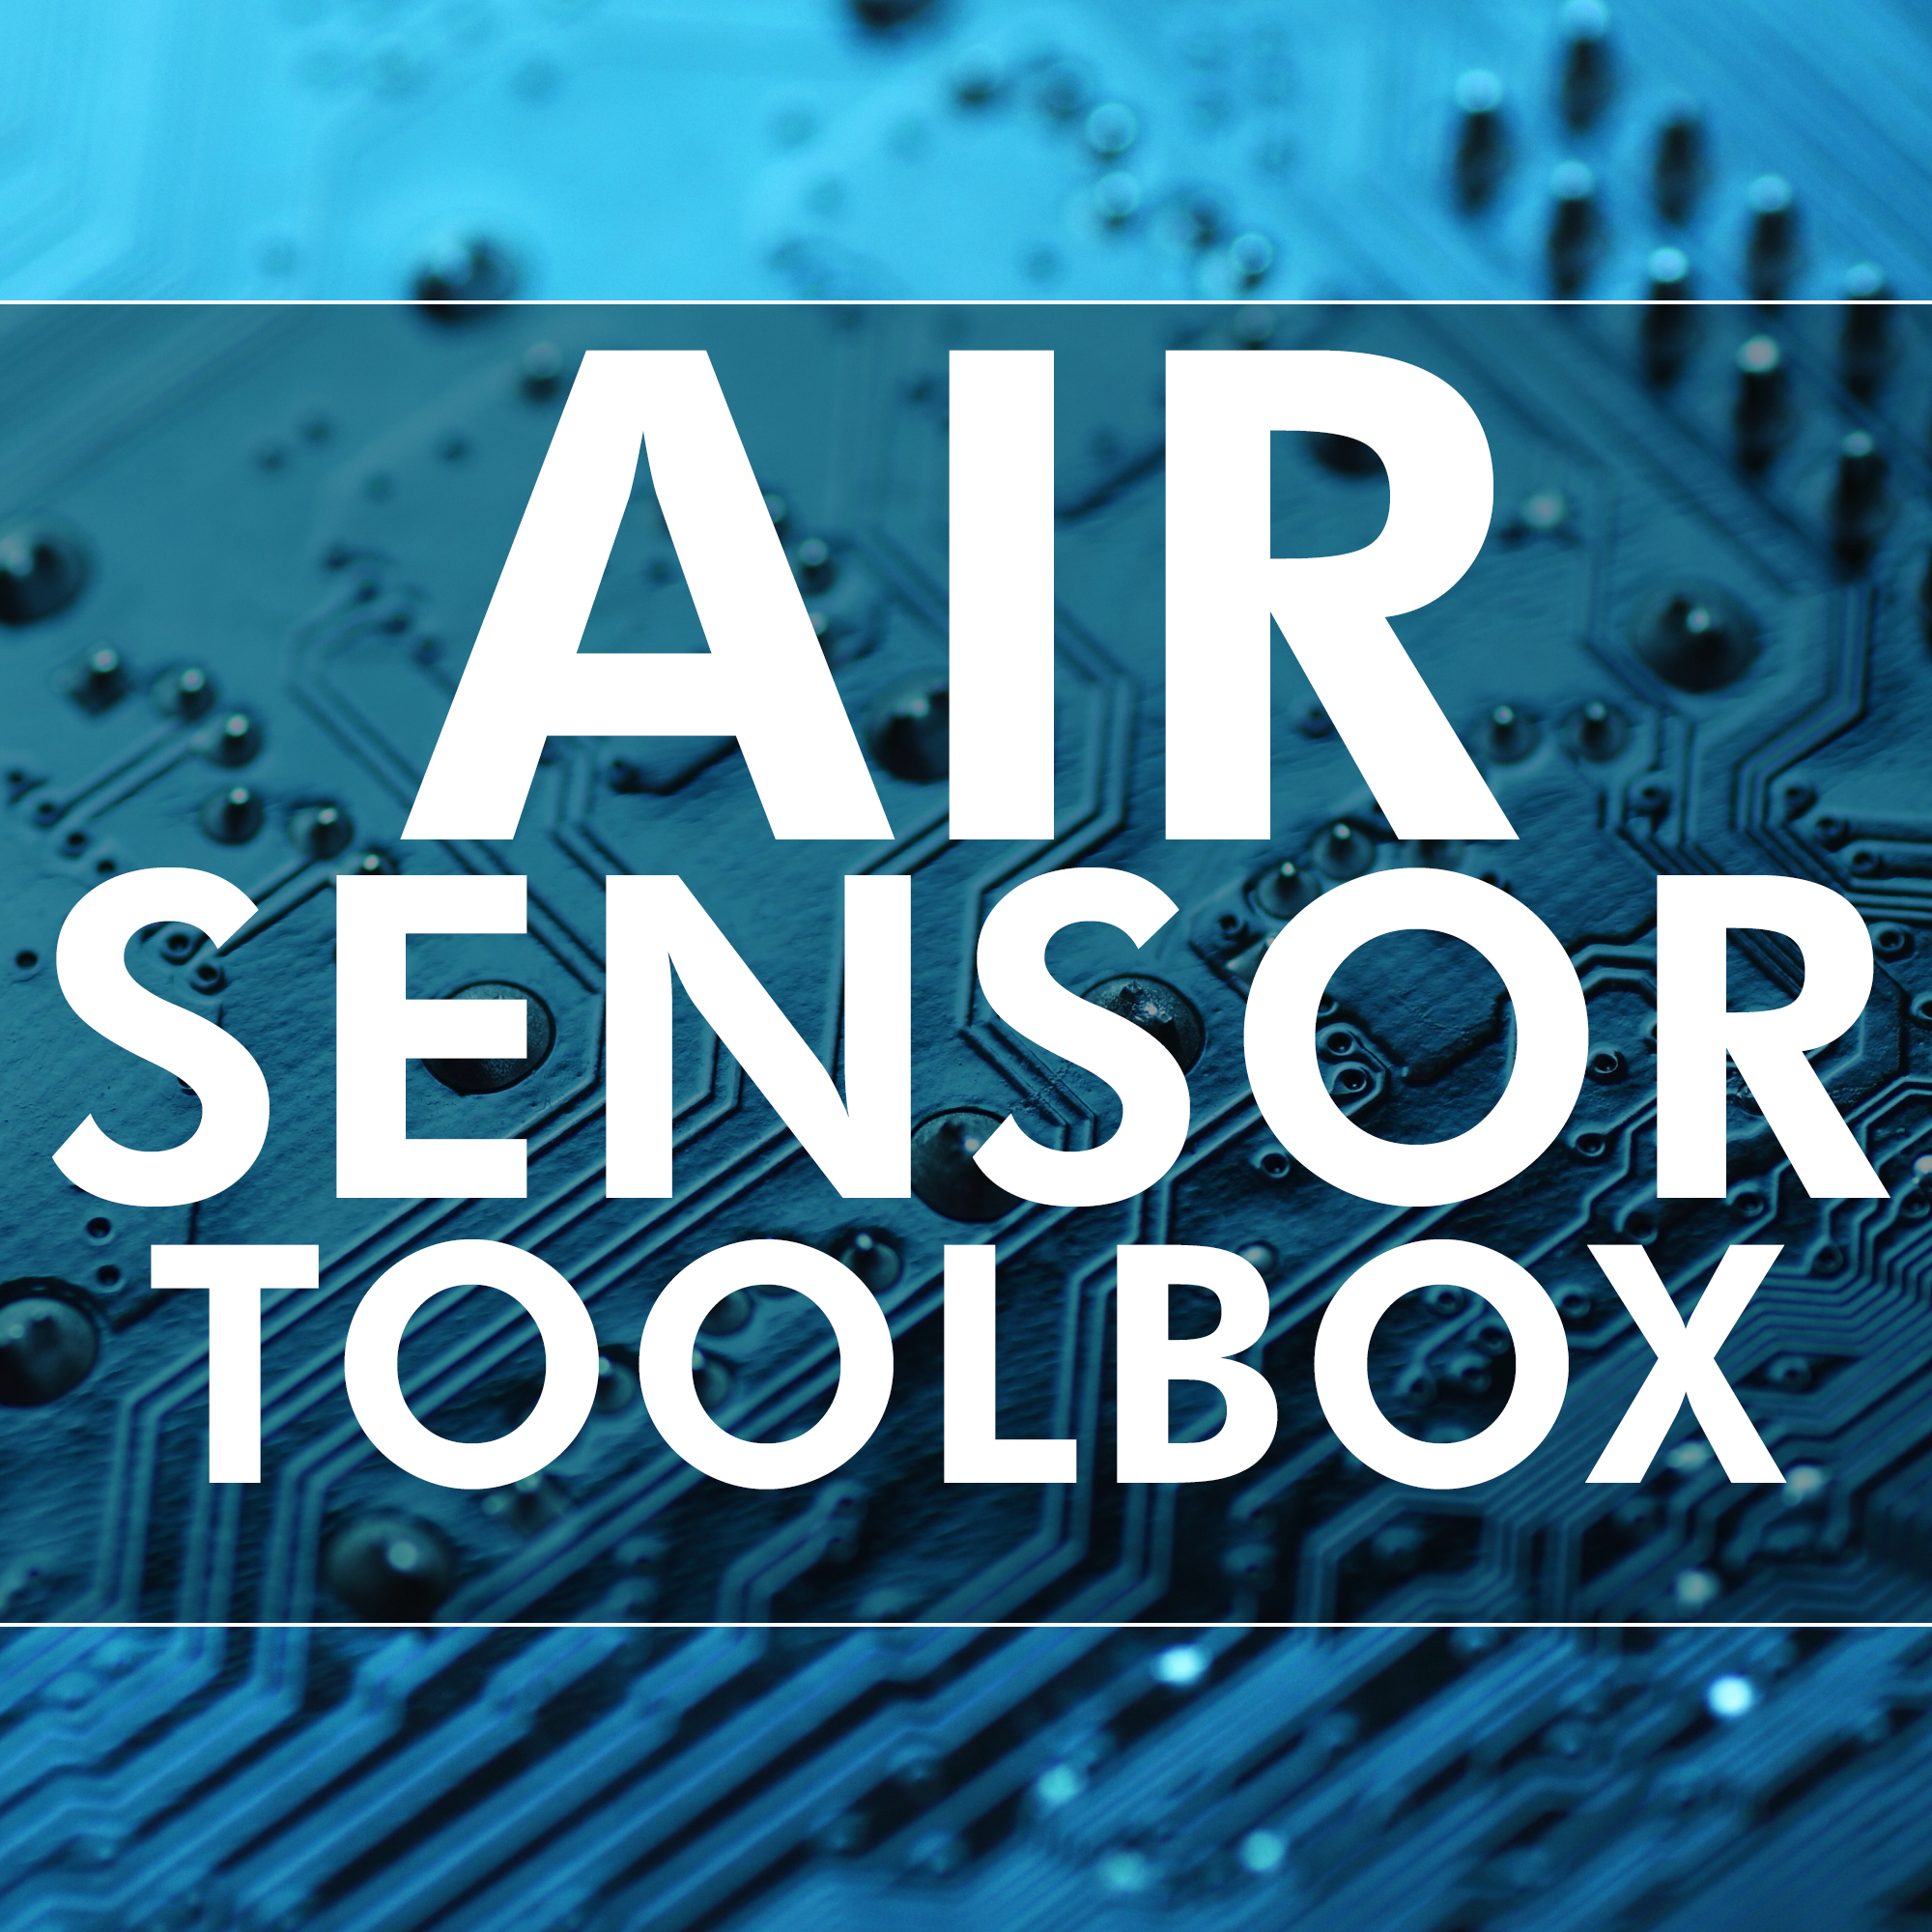 Words that say "Air Sensor Toolbox"